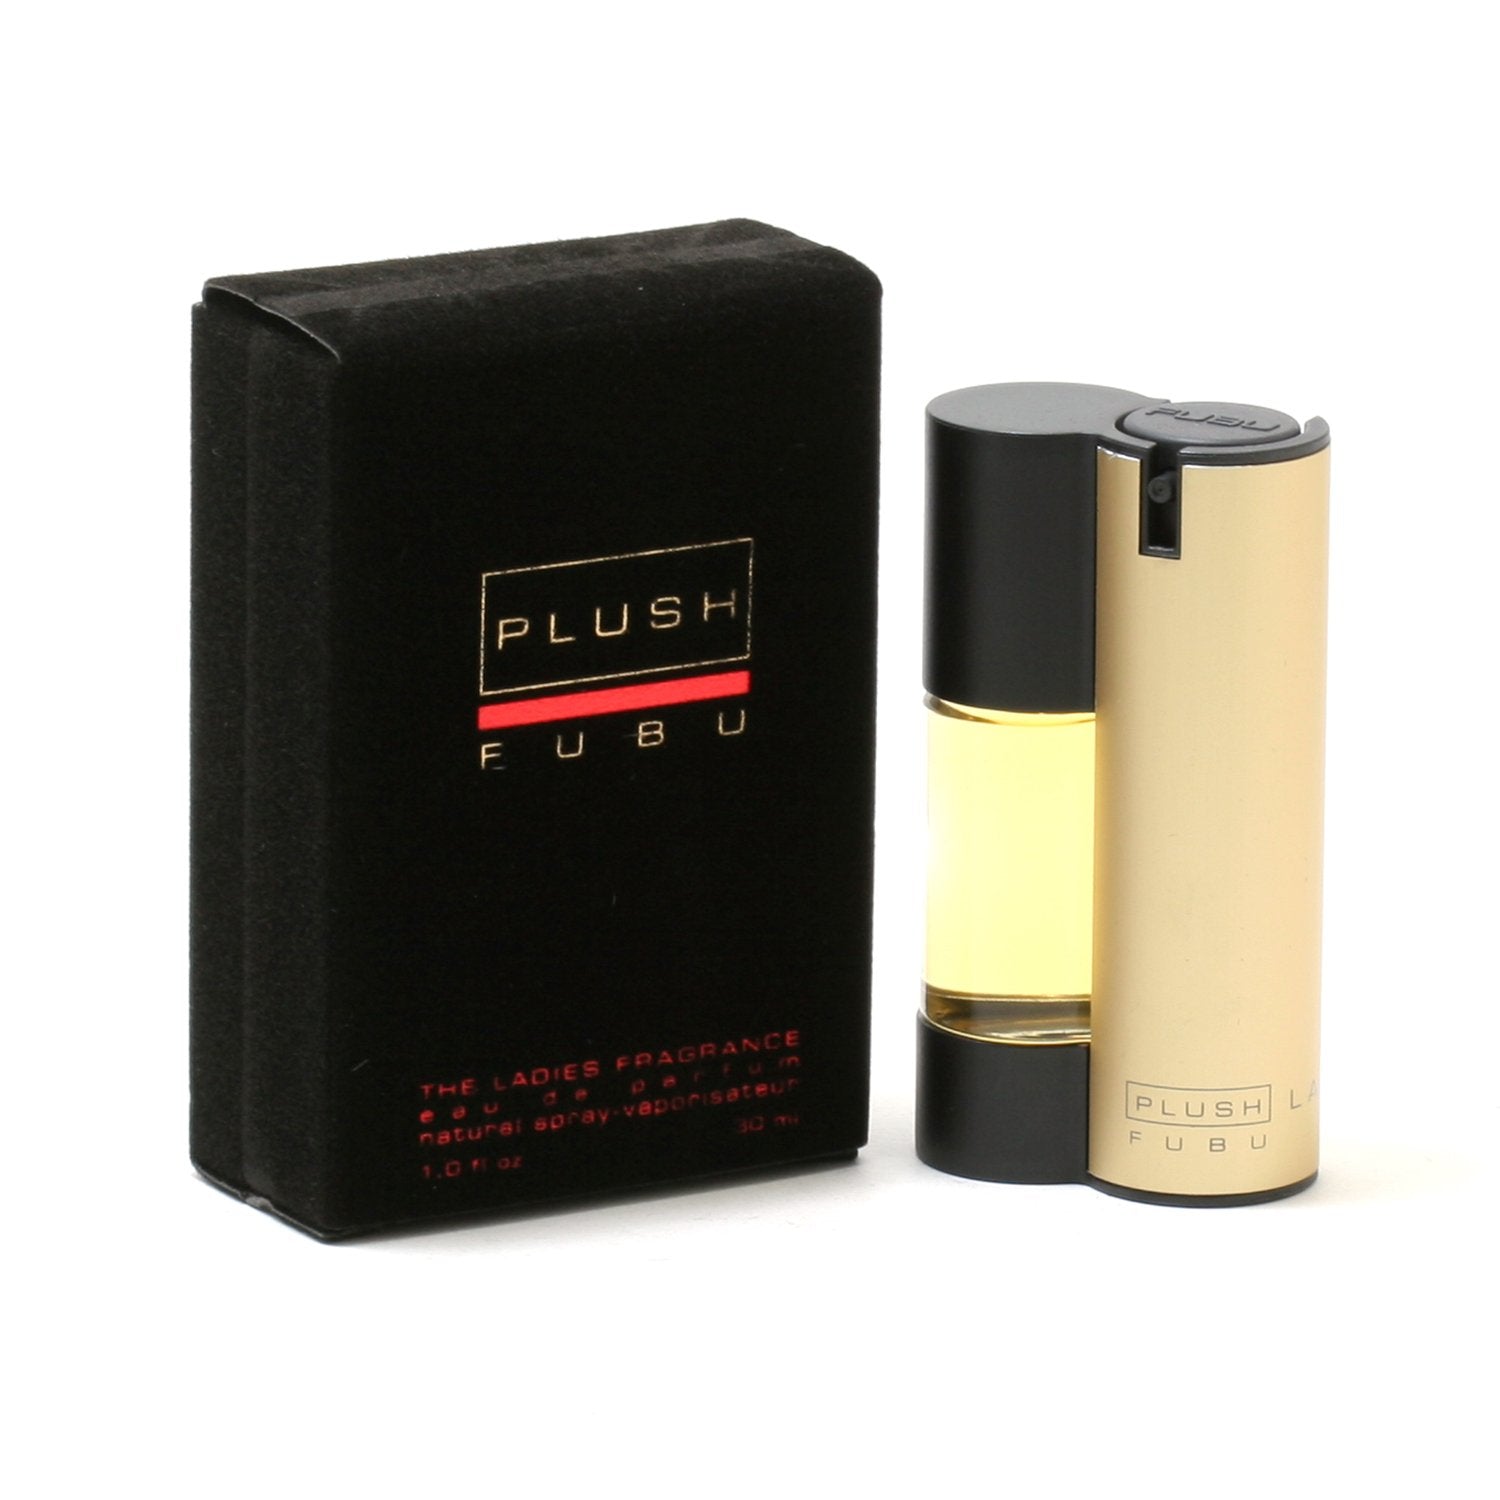 Perfume - PLUSH FOR WOMEN BY FUBU - EAU DE PARFUM SPRAY, 1.0 OZ